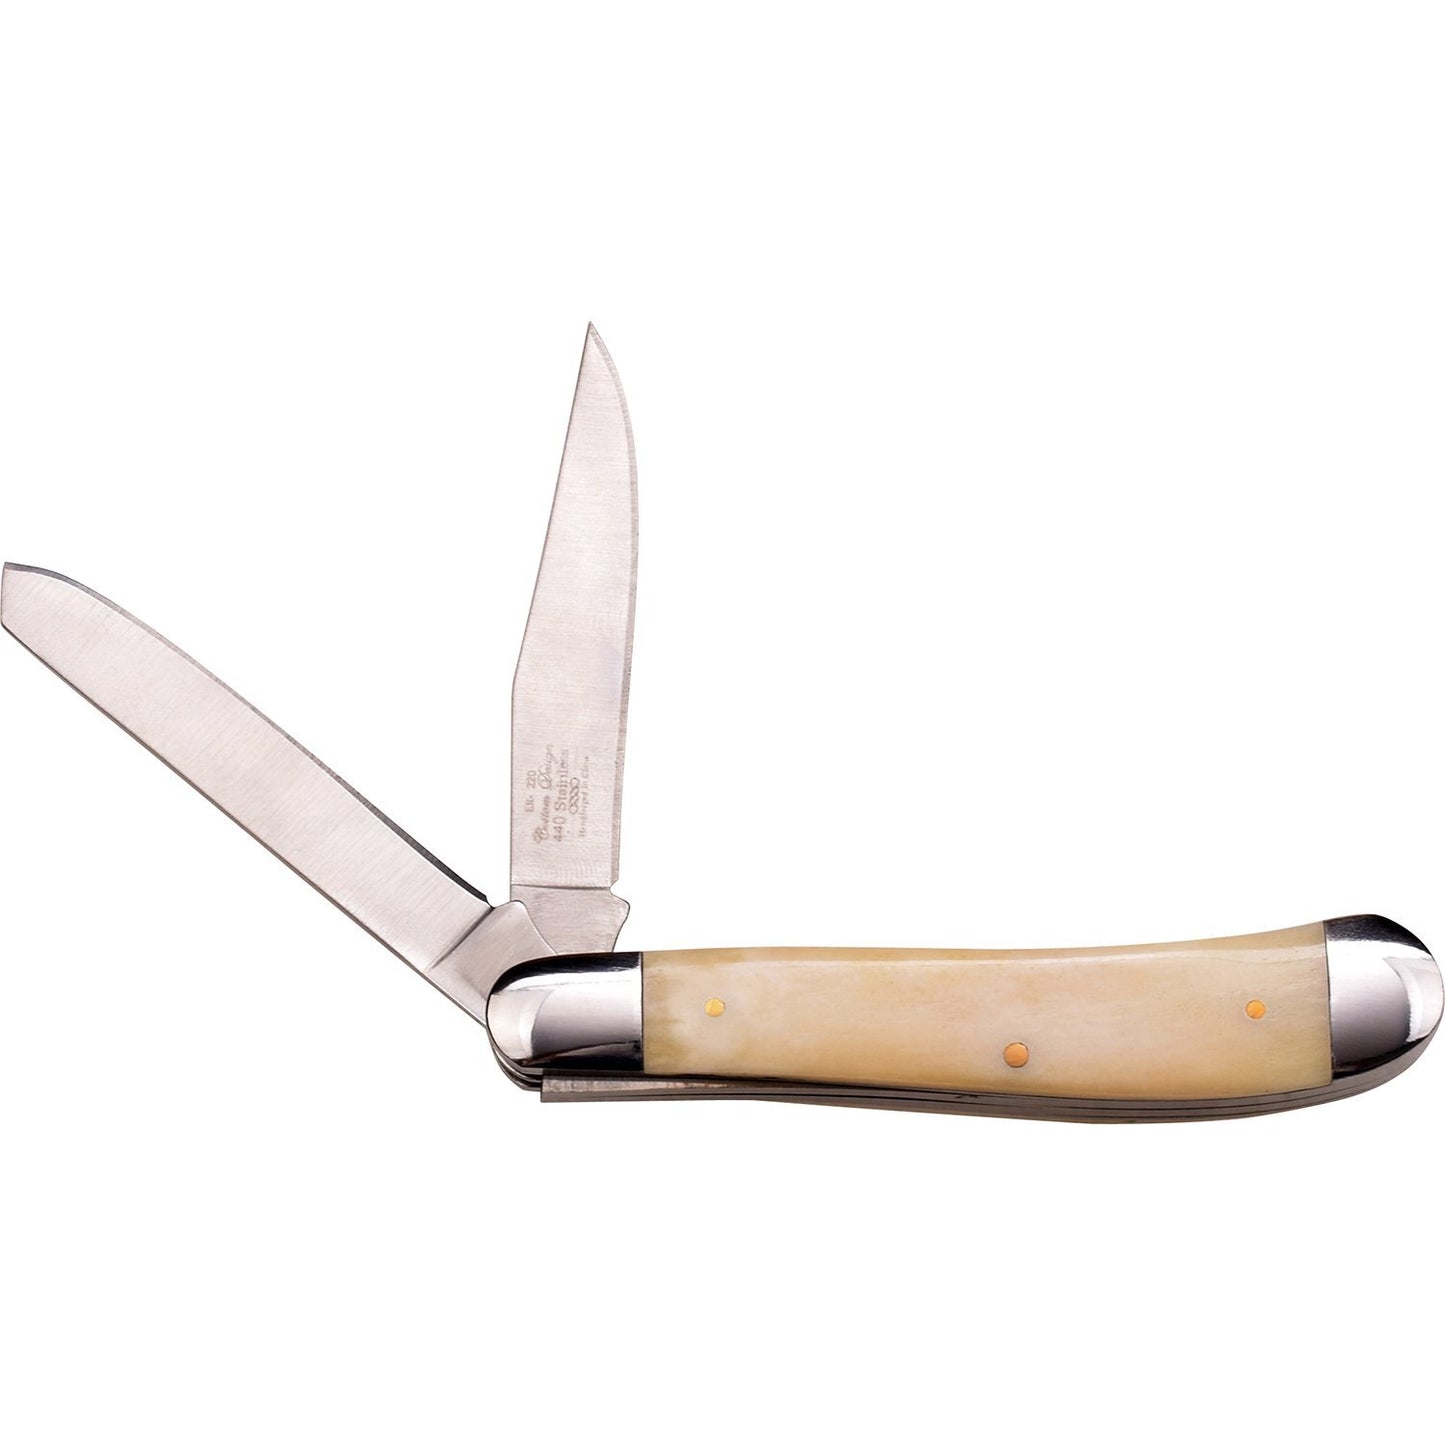 Elk Ridge Elk Ridge Tactical Clip Point Folding Knife - Bone Deer Artwork 2 Blades #er-220Dr Tan